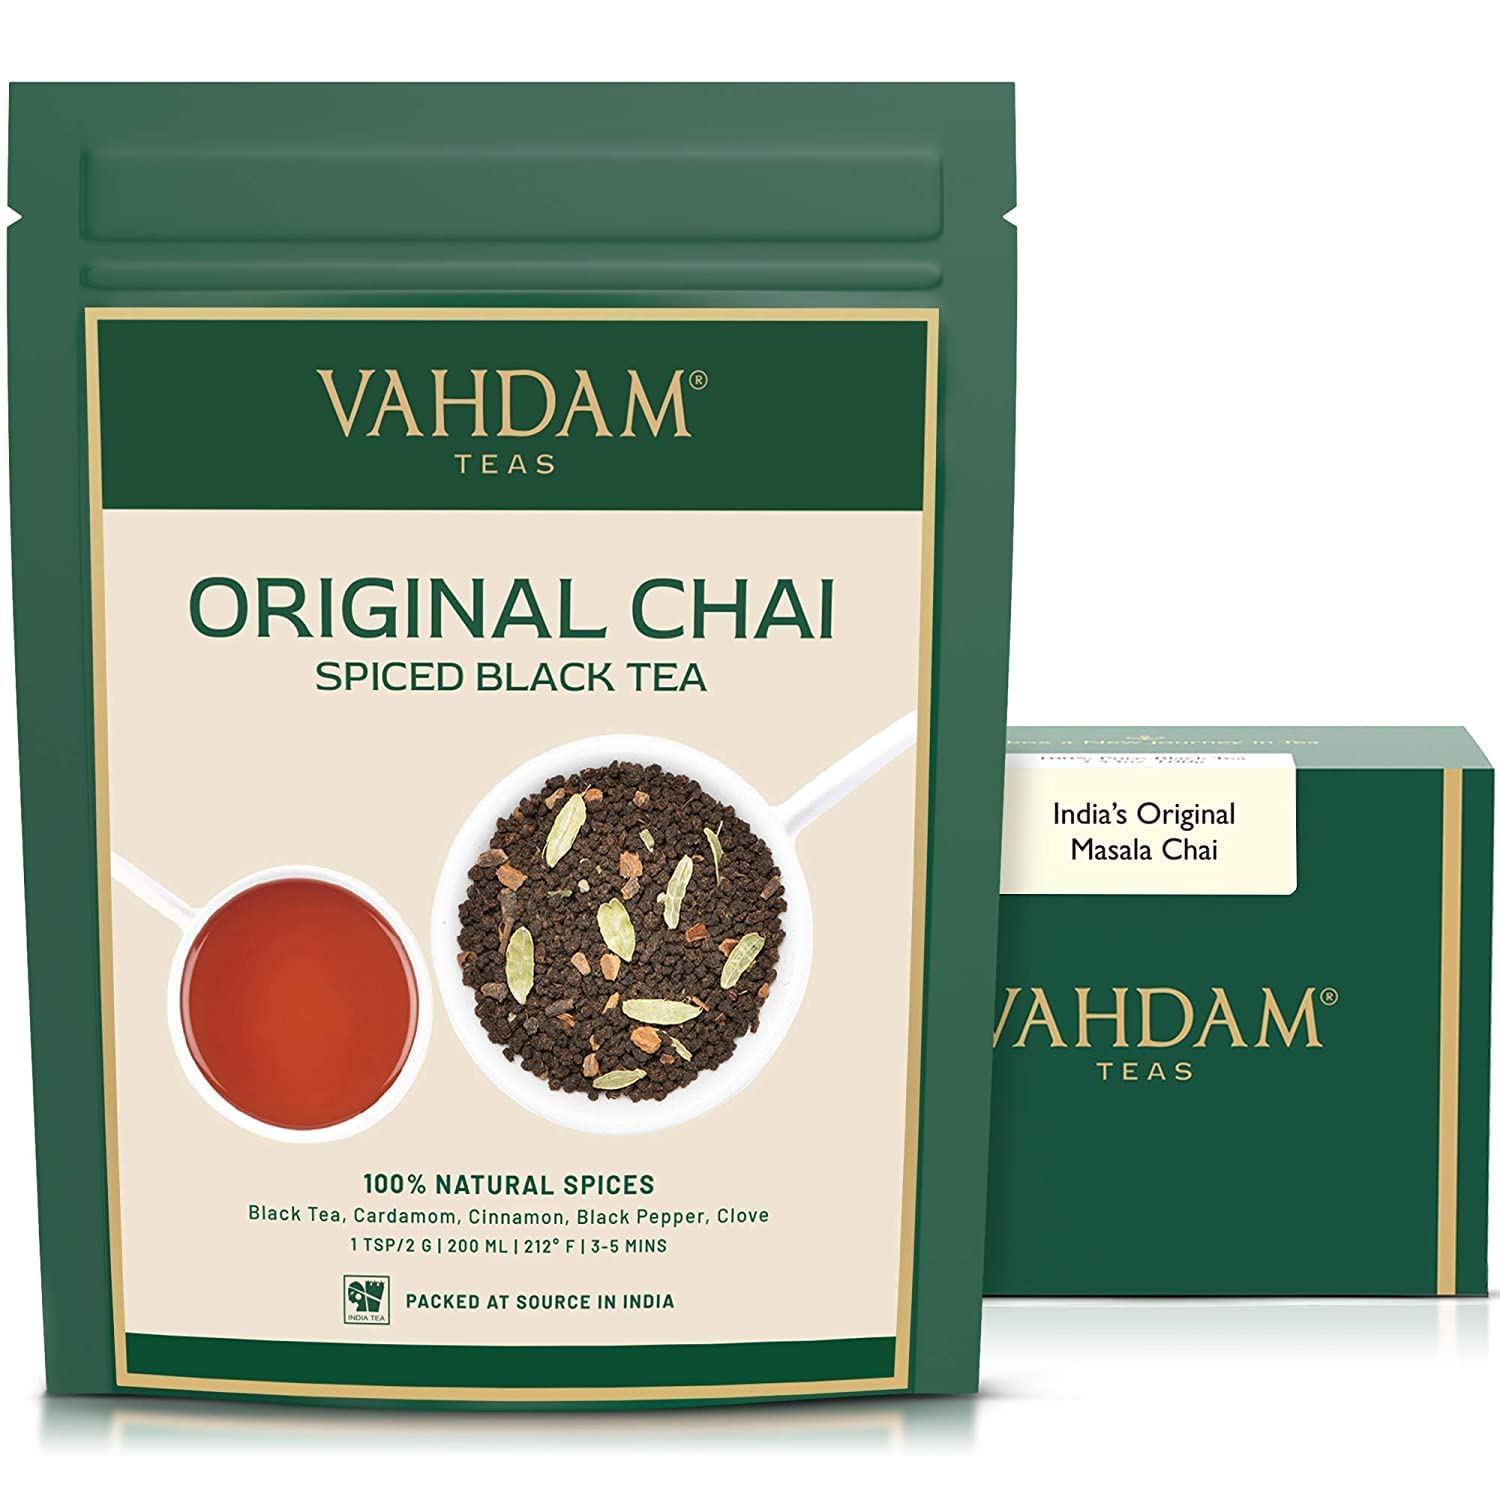 VAHDAM, India's Original Masala Chai Tea Loose Leaf 170+ Cups (340g/12oz) Real ingredients - Black Tea, Cinnamon, Cardamom, Cloves & Black Pepper - Vacuum Sealed Pack